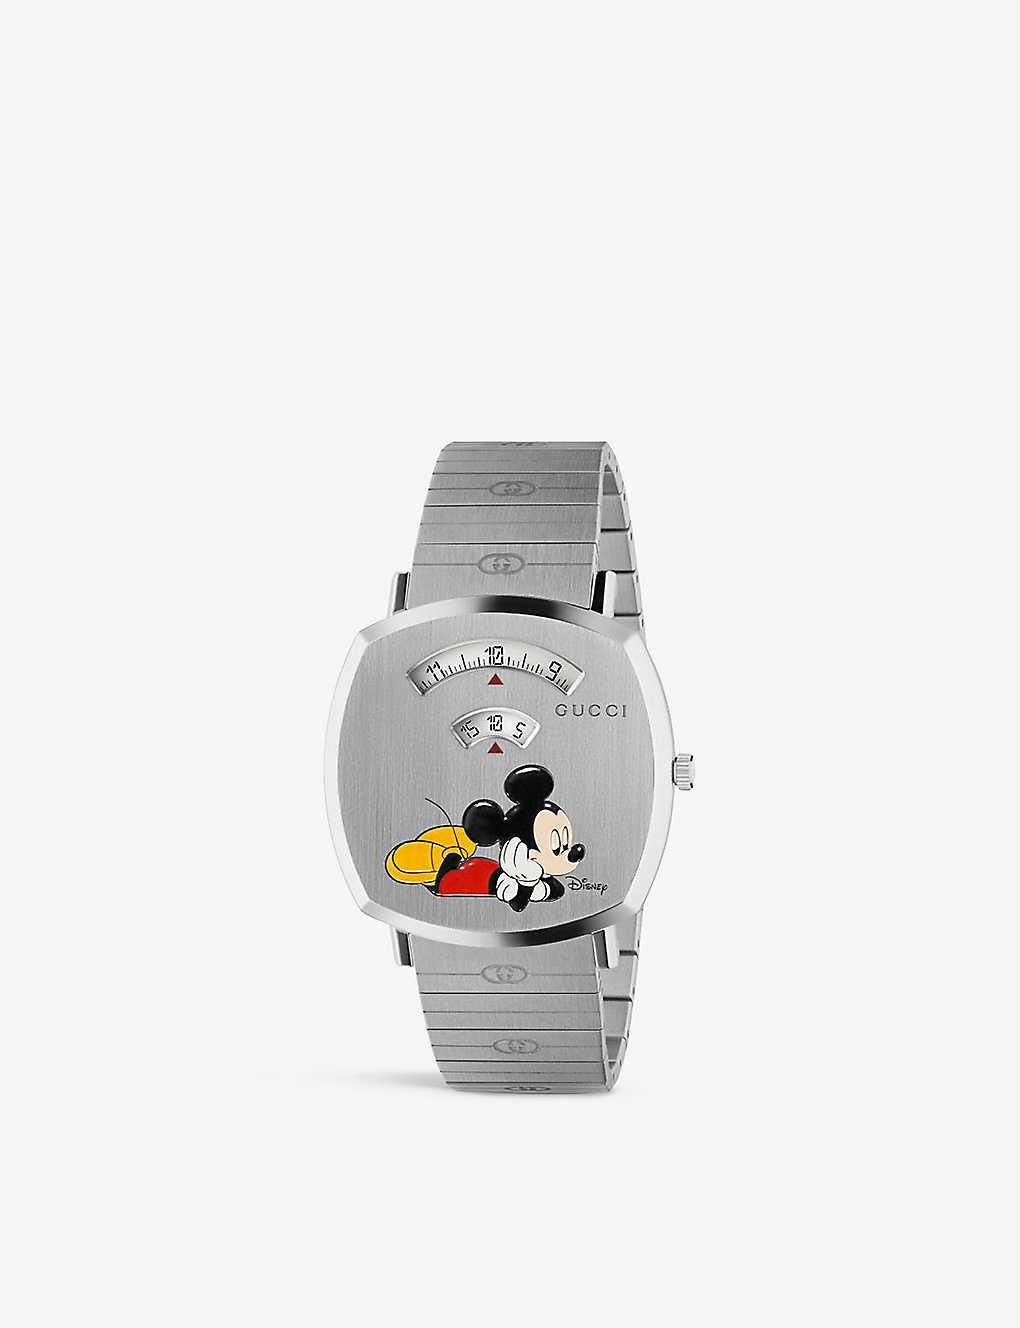 Gucci x Disney YA157419 Grip stainless steel quartz watch(8409178)